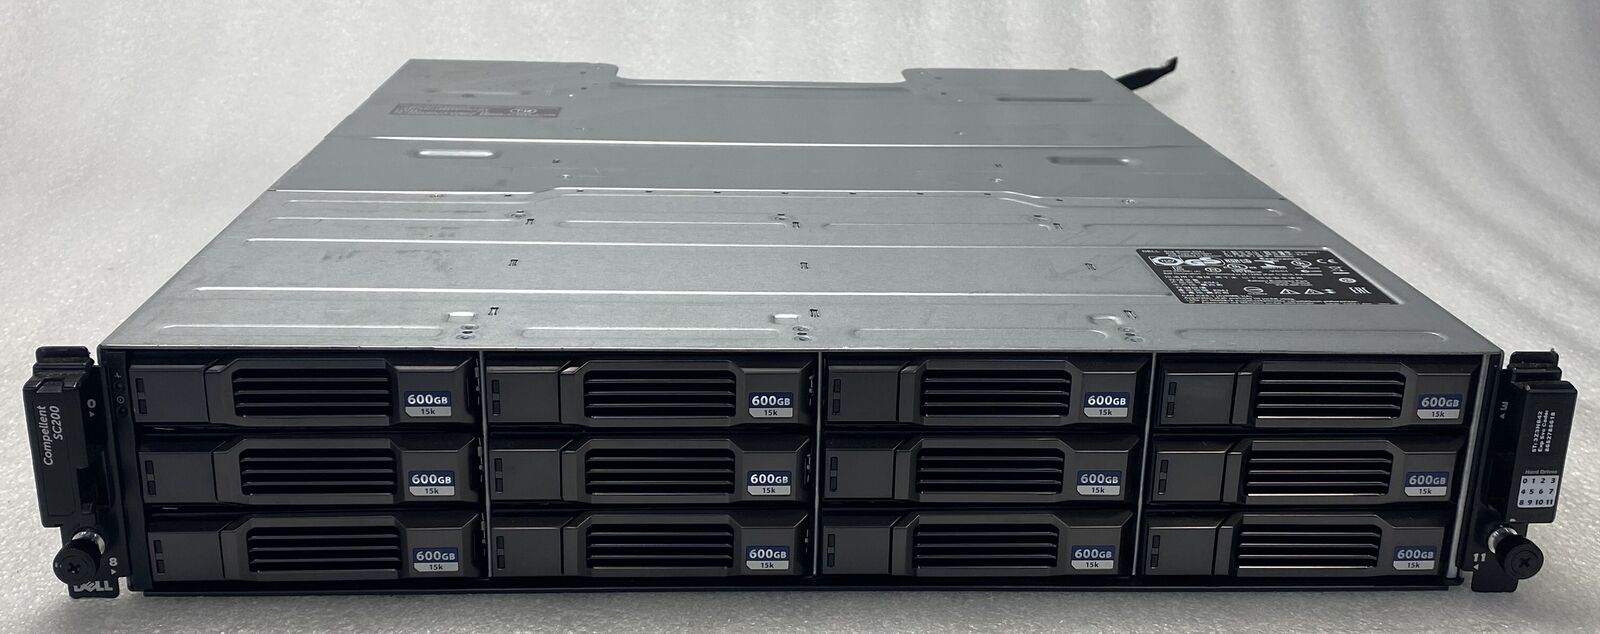 Dell Compellant SC200 12x SAS SAN Disk Storage Array Expansion Bay COMPLETE